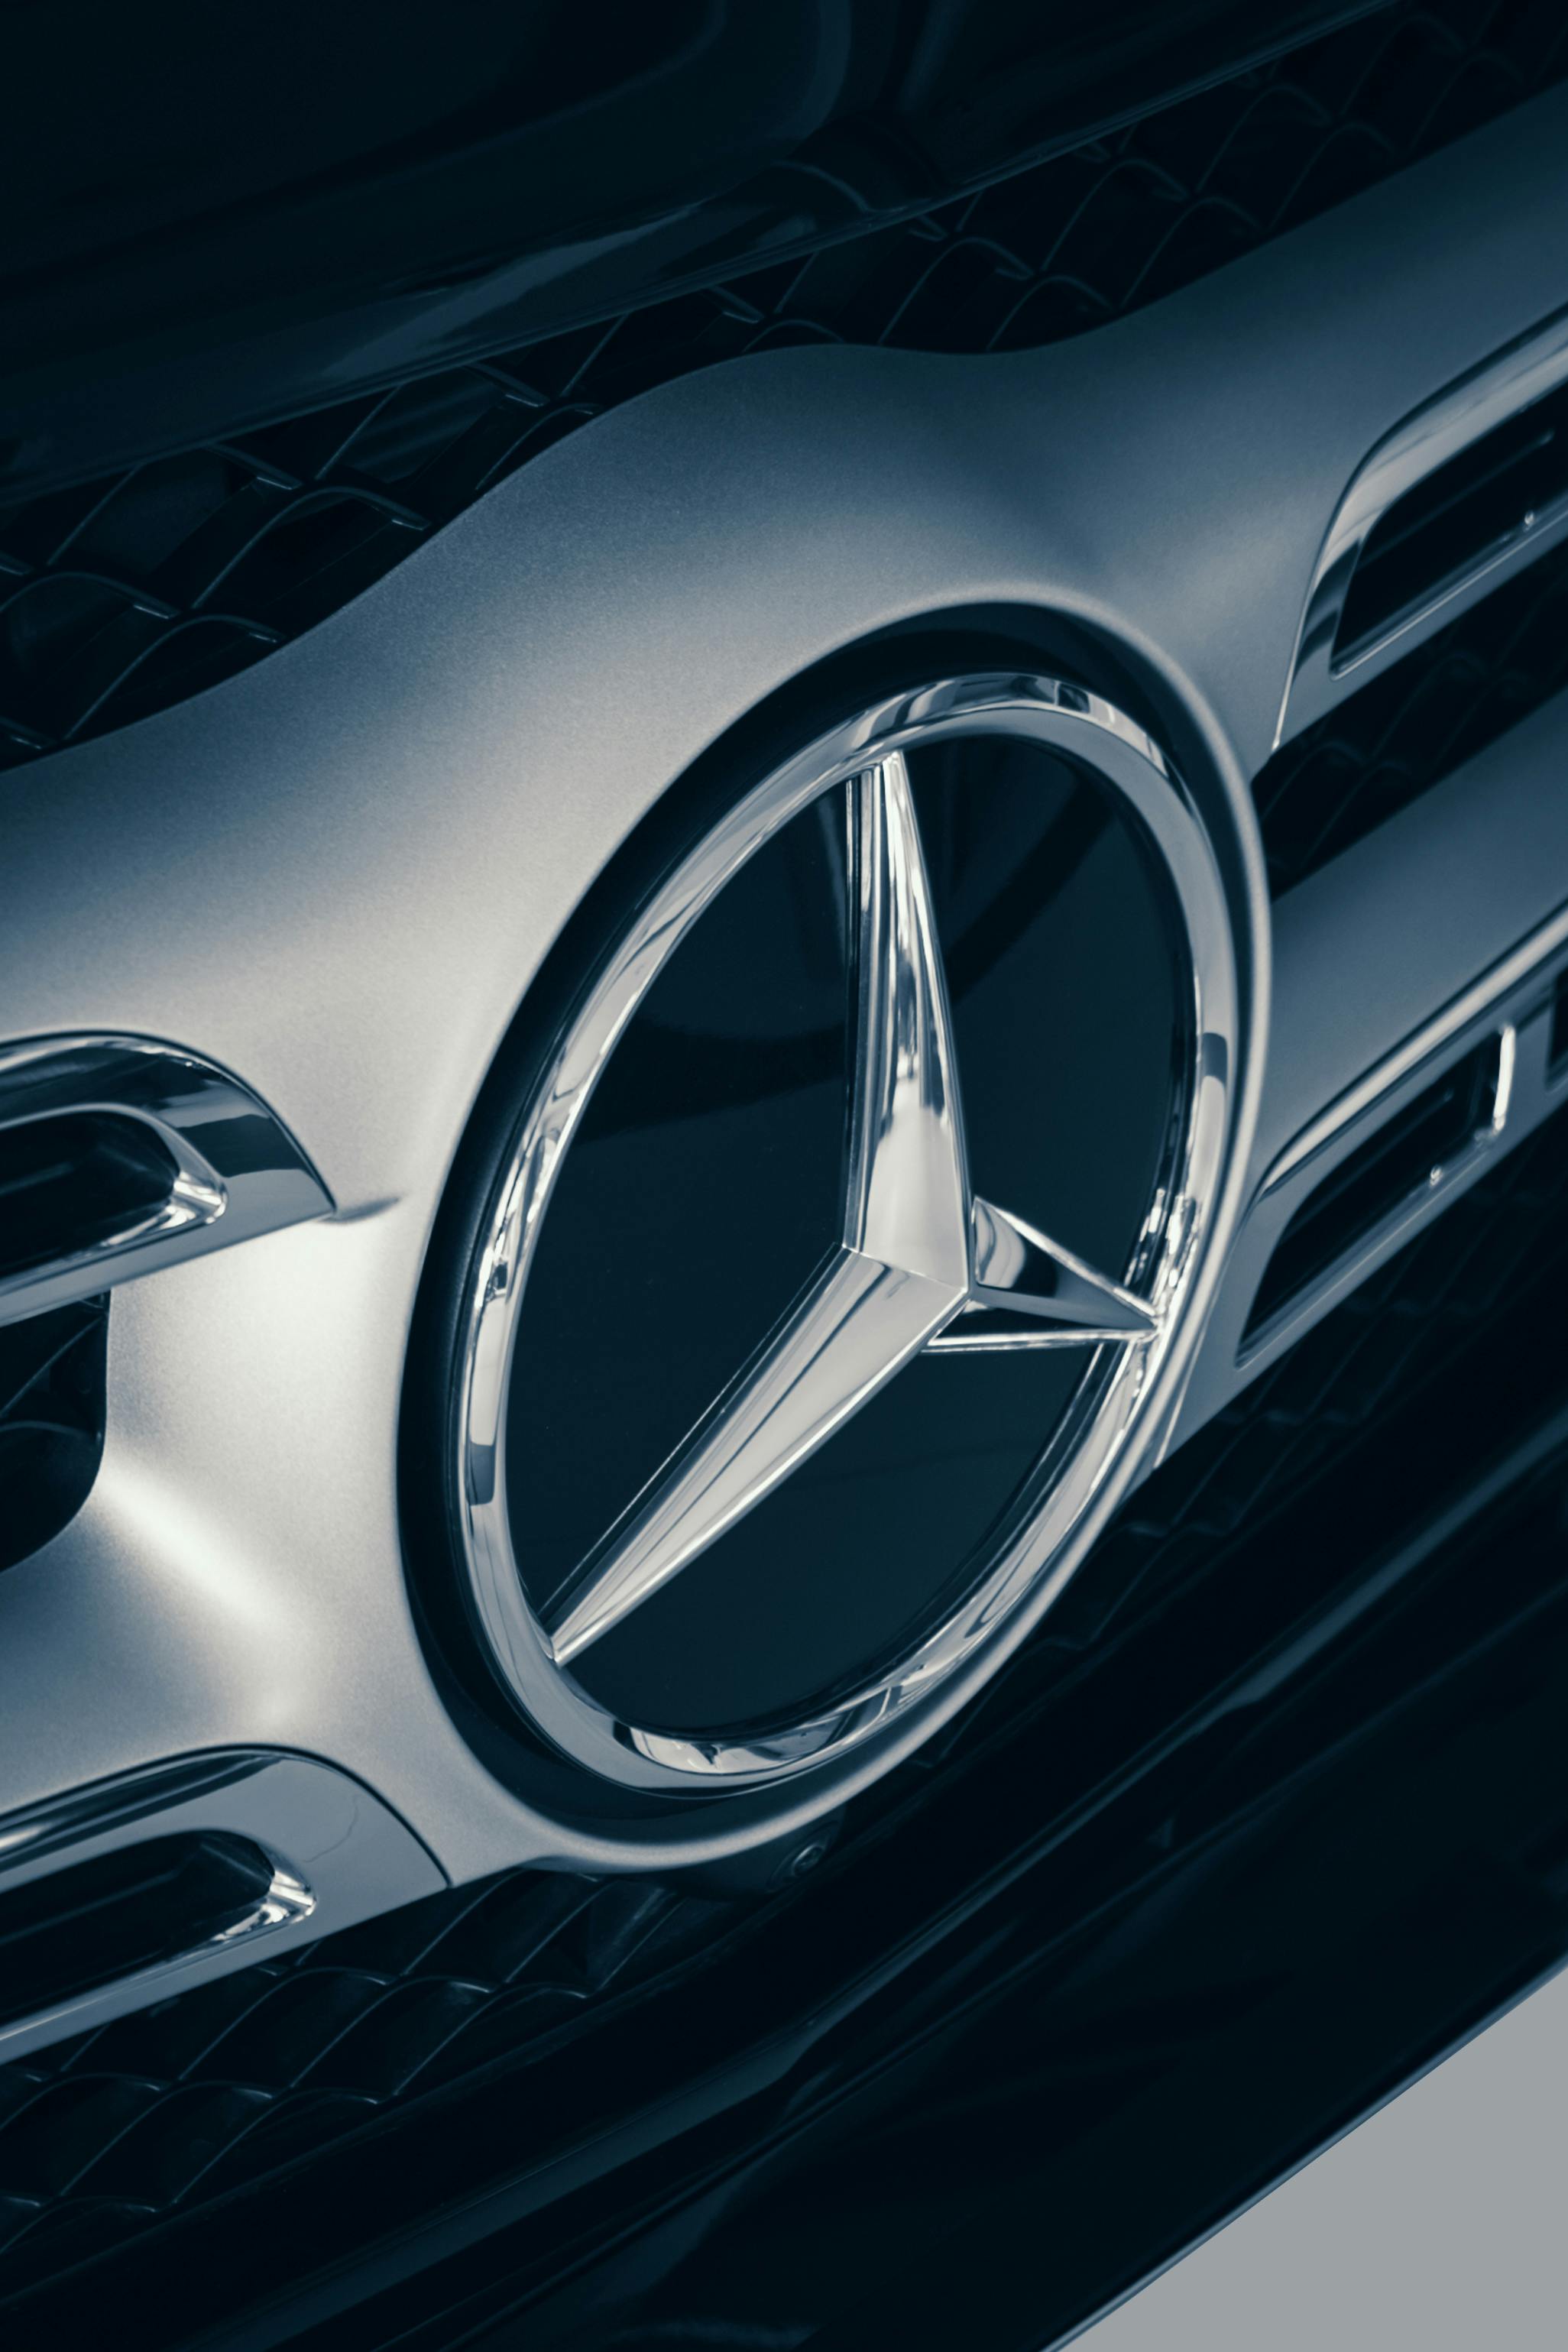 Mercedes Benz Silver Emblem · Free Stock Photo